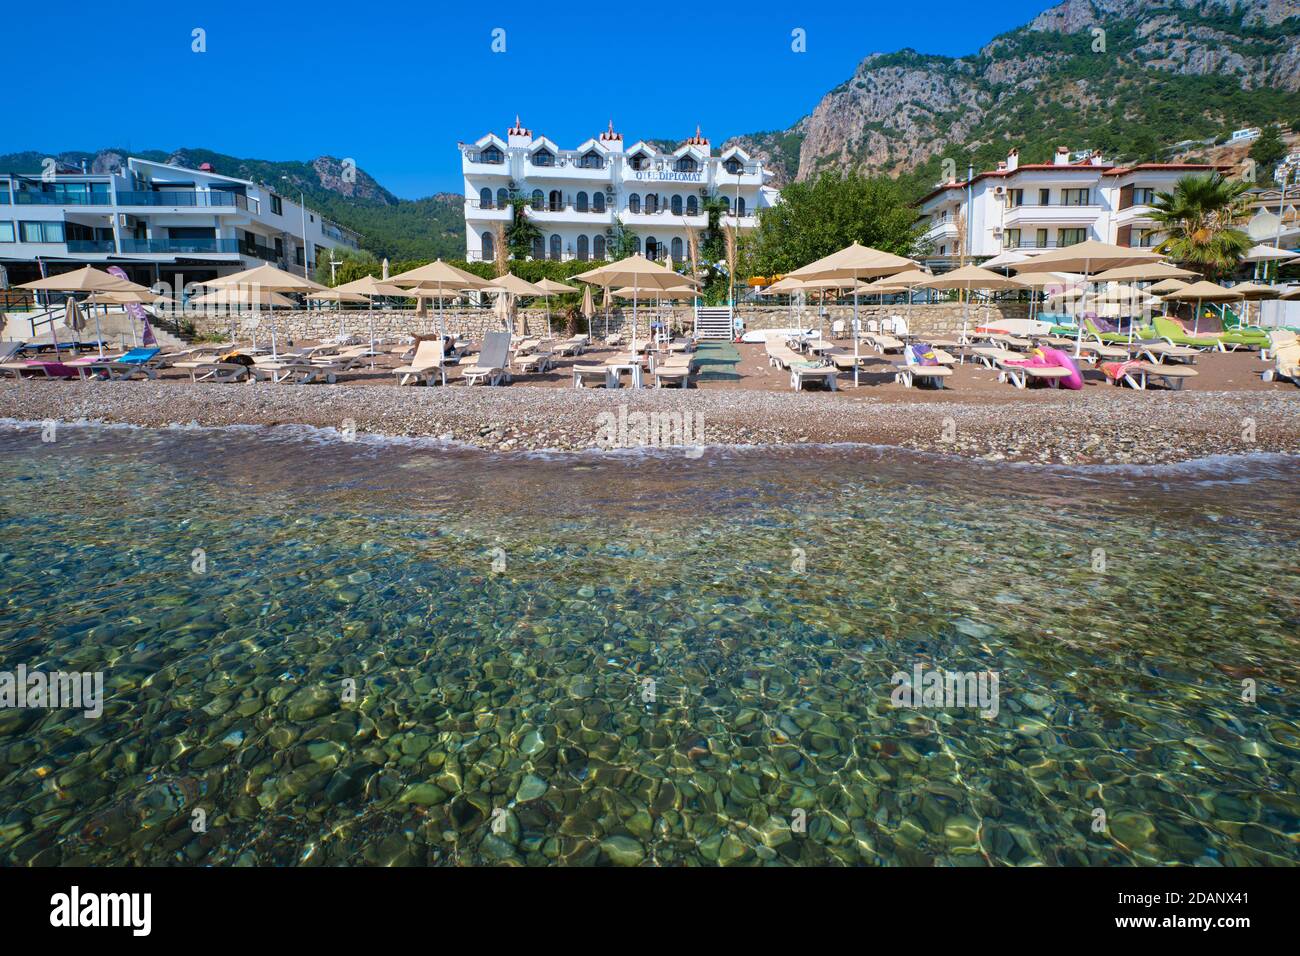 Diplomat hotel beach in Turunc Marmaris, Turkey Stock Photo